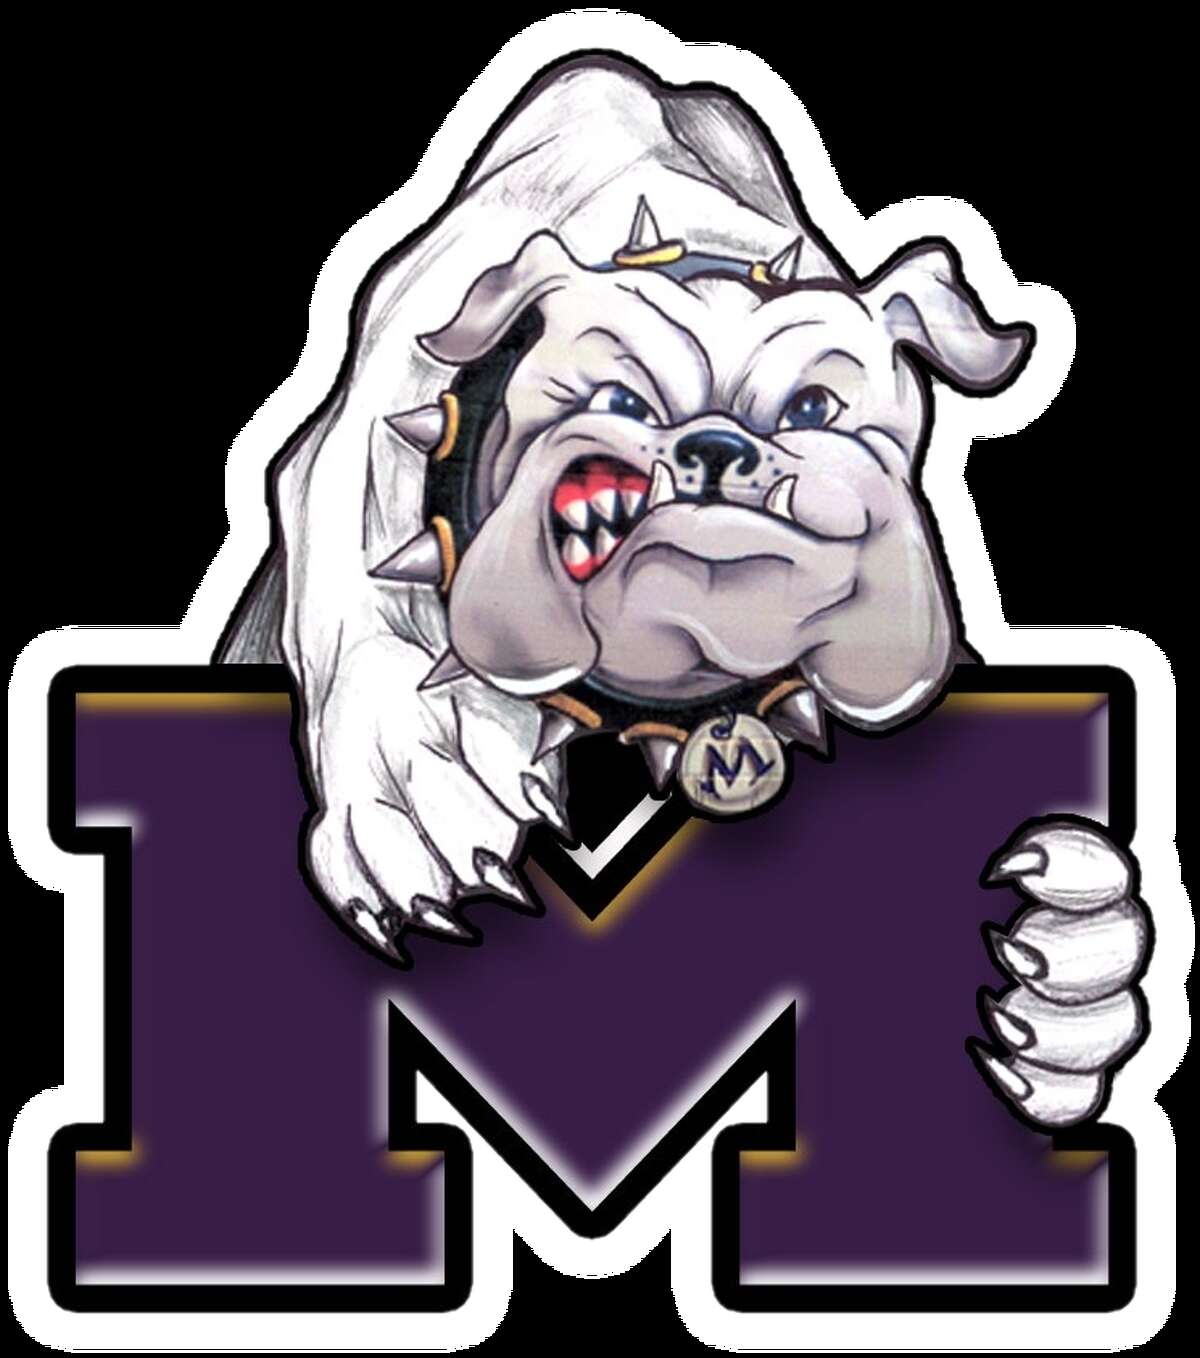 Midland High logo